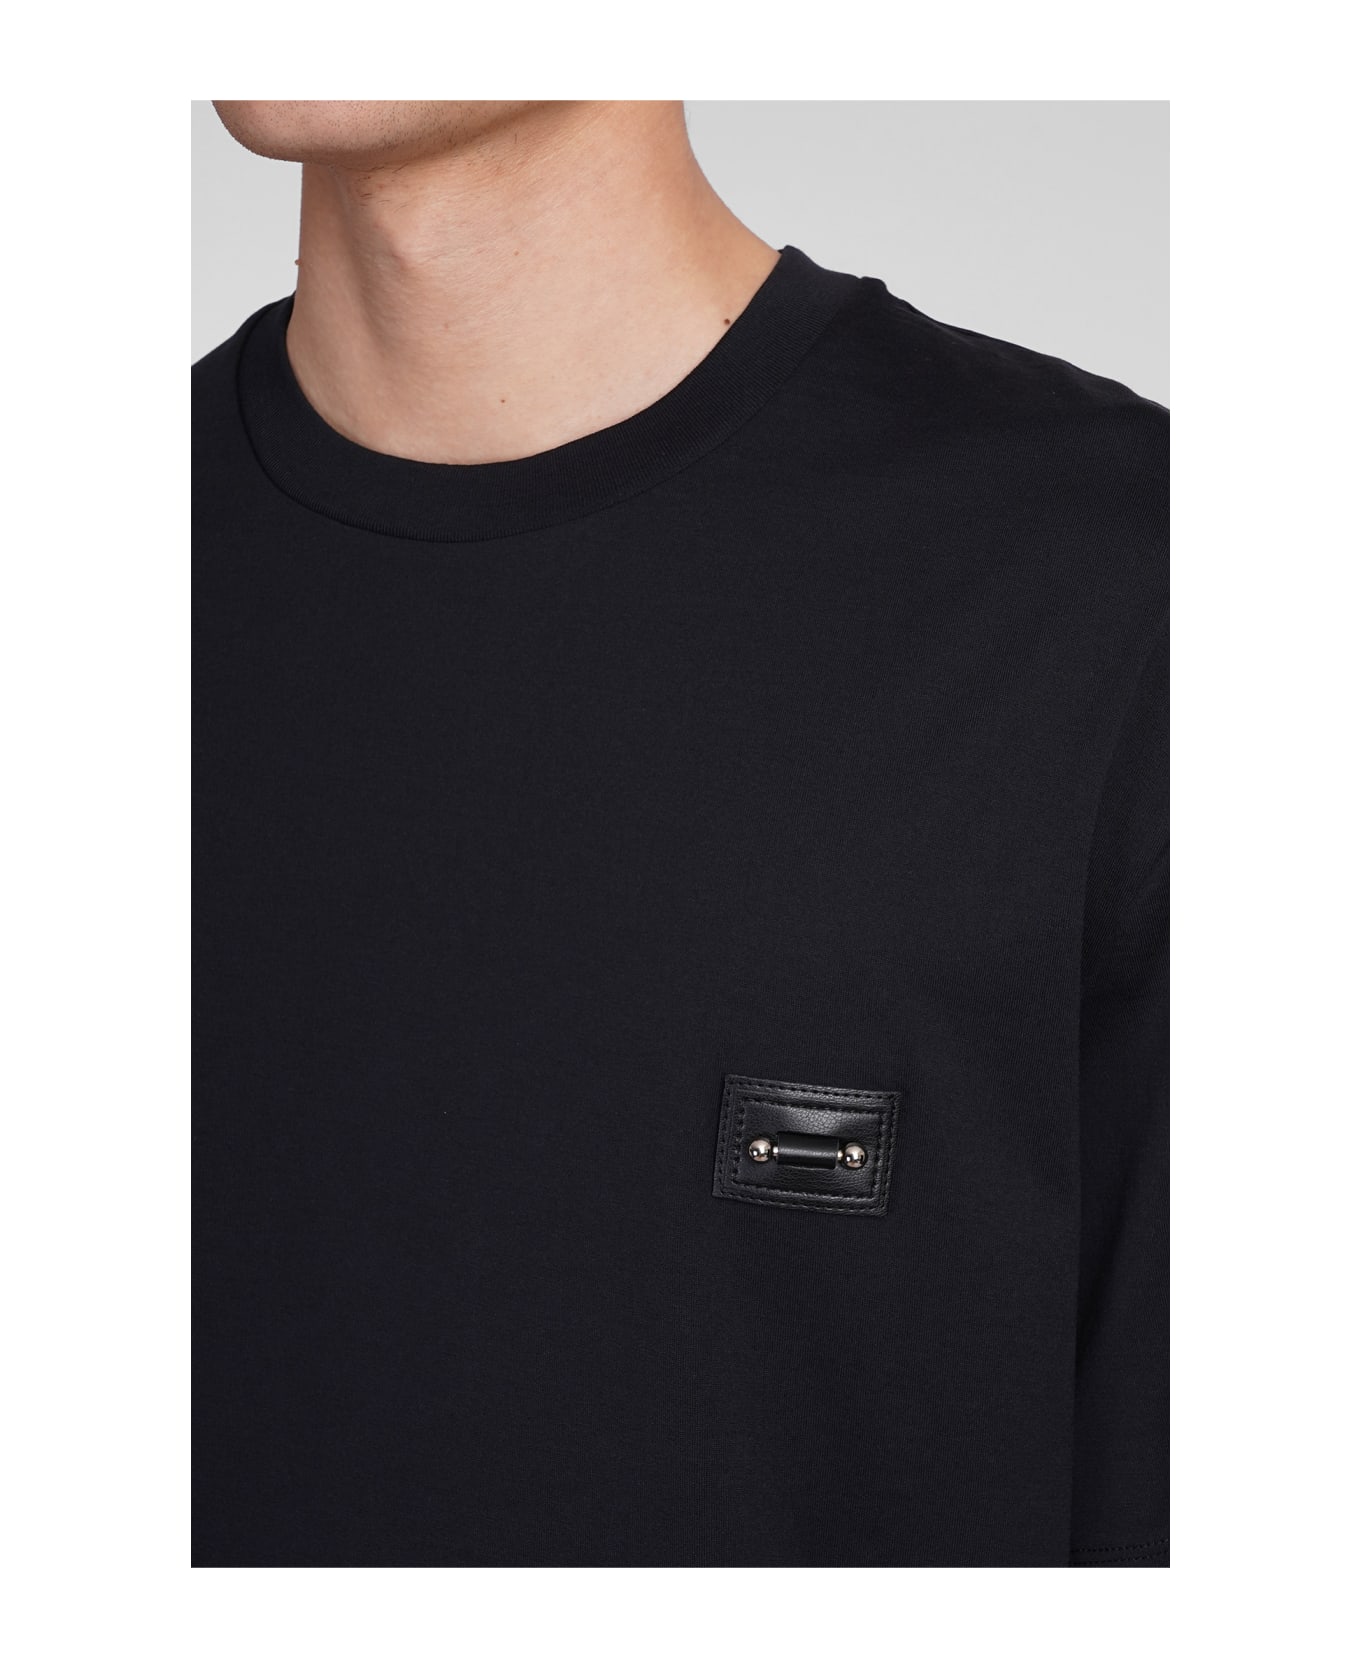 Neil Barrett T-shirt In Black Cotton - black